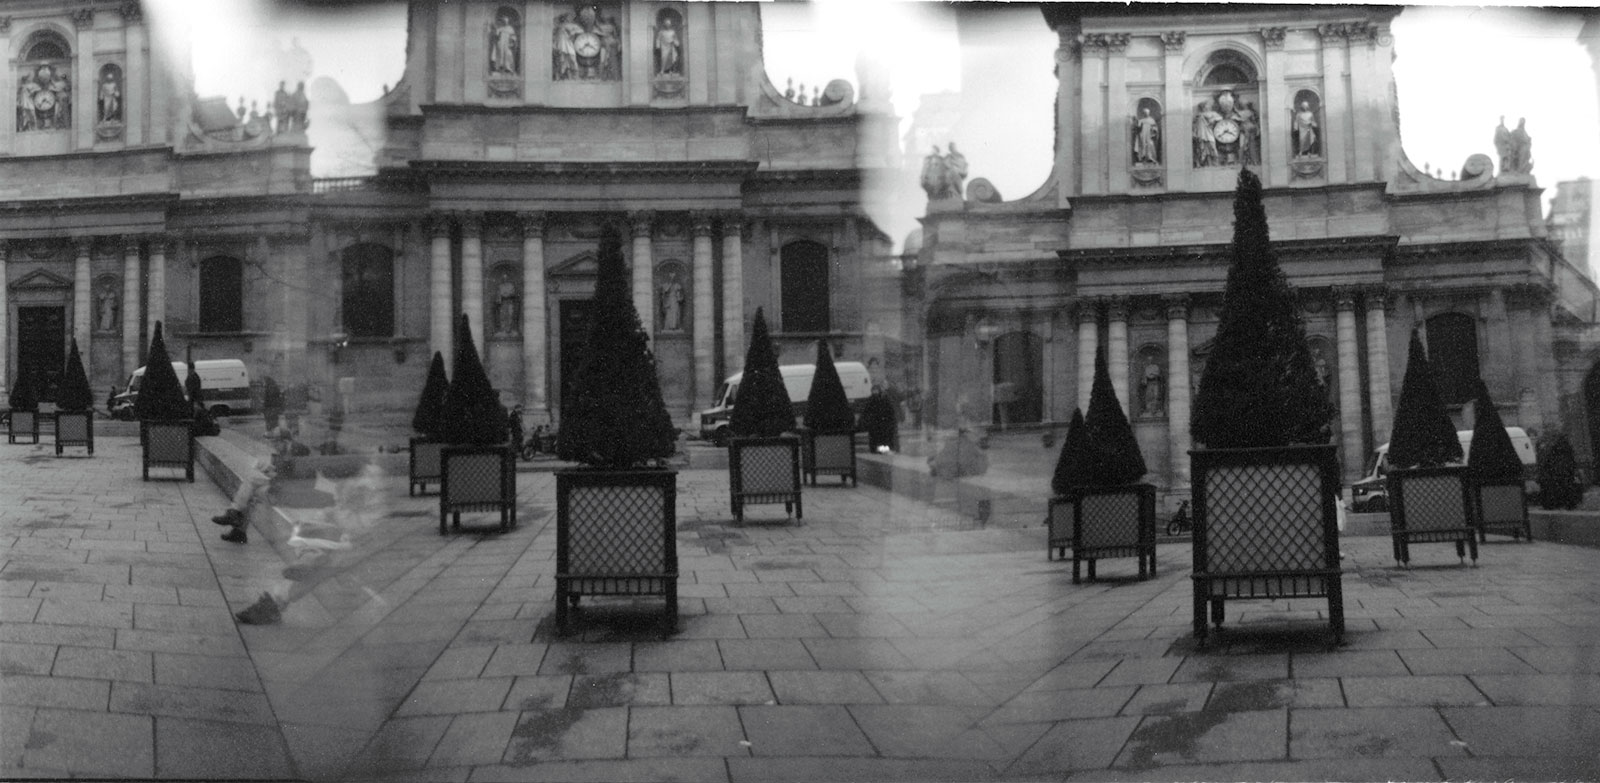 Sorbonne, Paris, France | Holga camera image (1998)